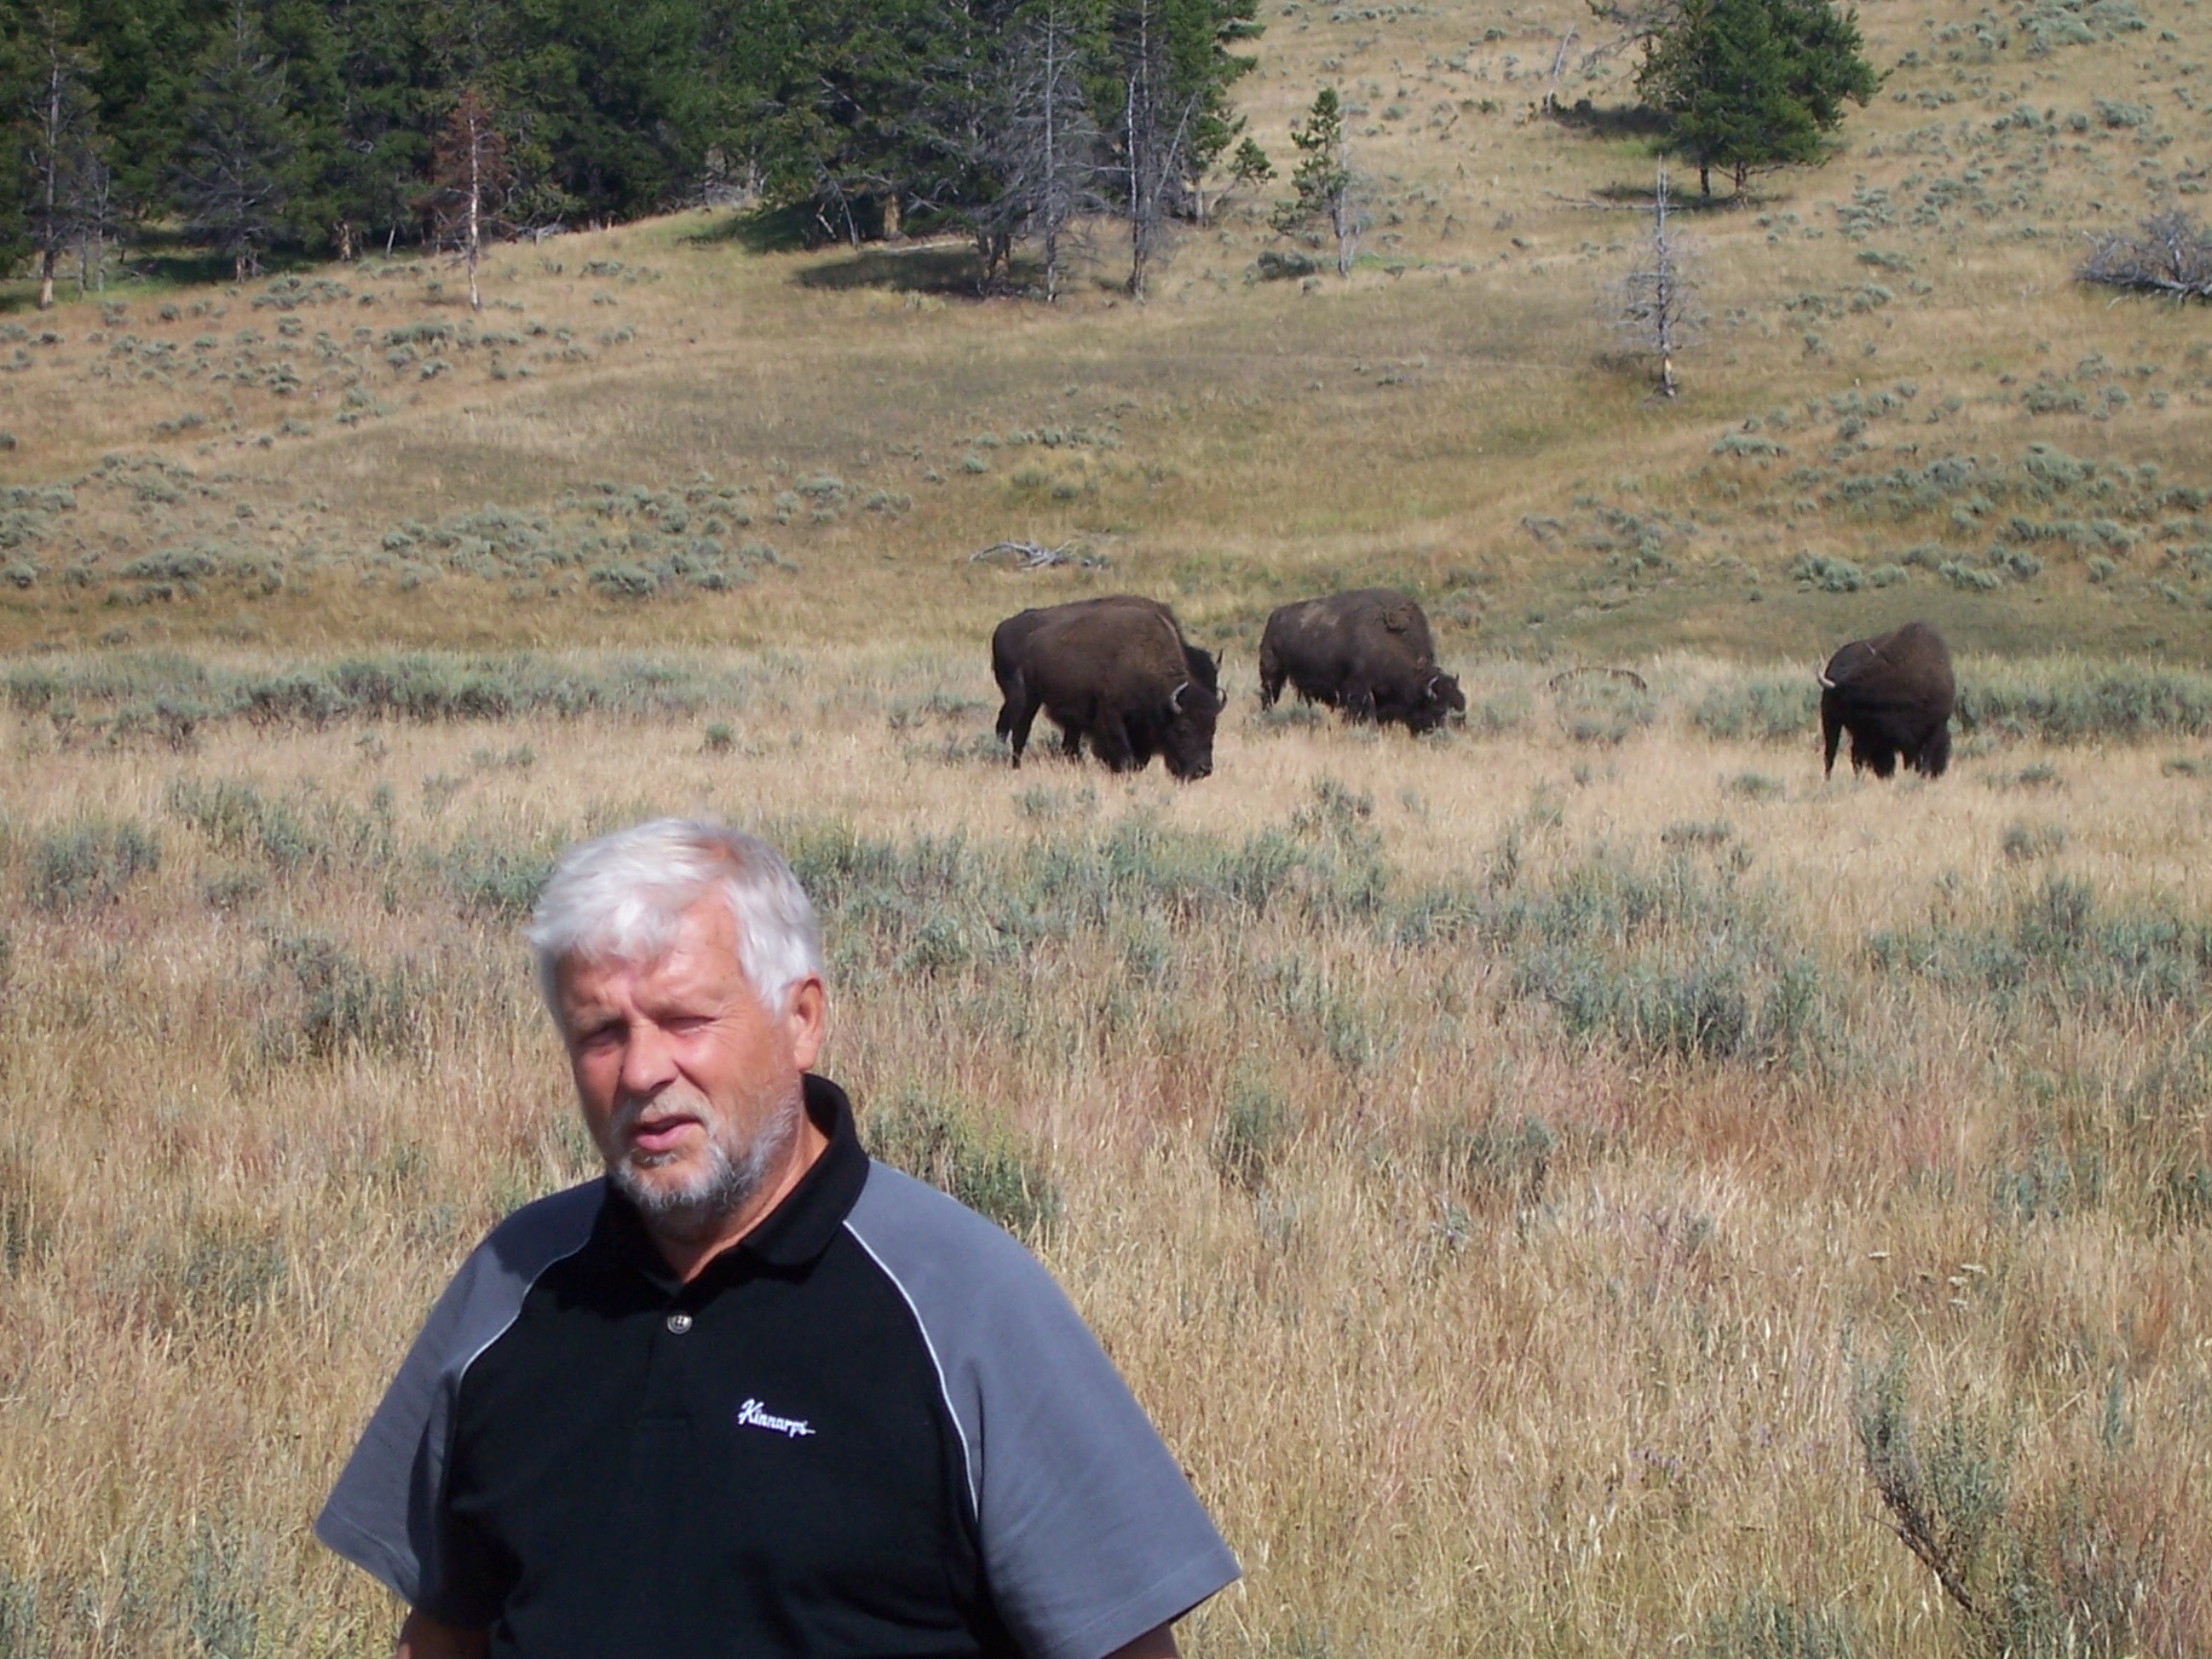 My dad, Stig, in front of Buffalos.